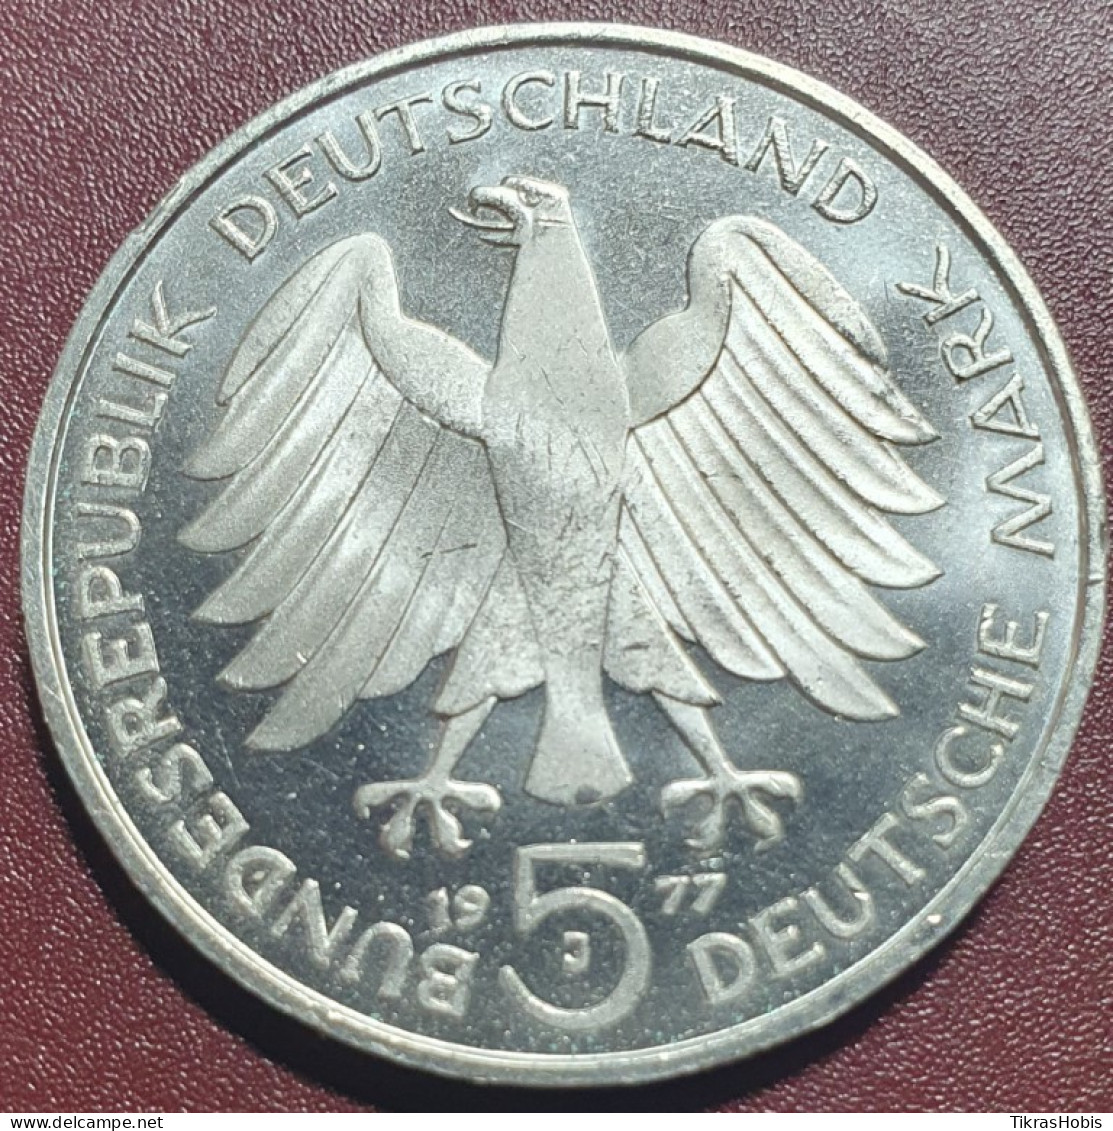 Germany 5 Brands, 1977 K. Friedrich Gauss 200 Km145 - Commémoratives